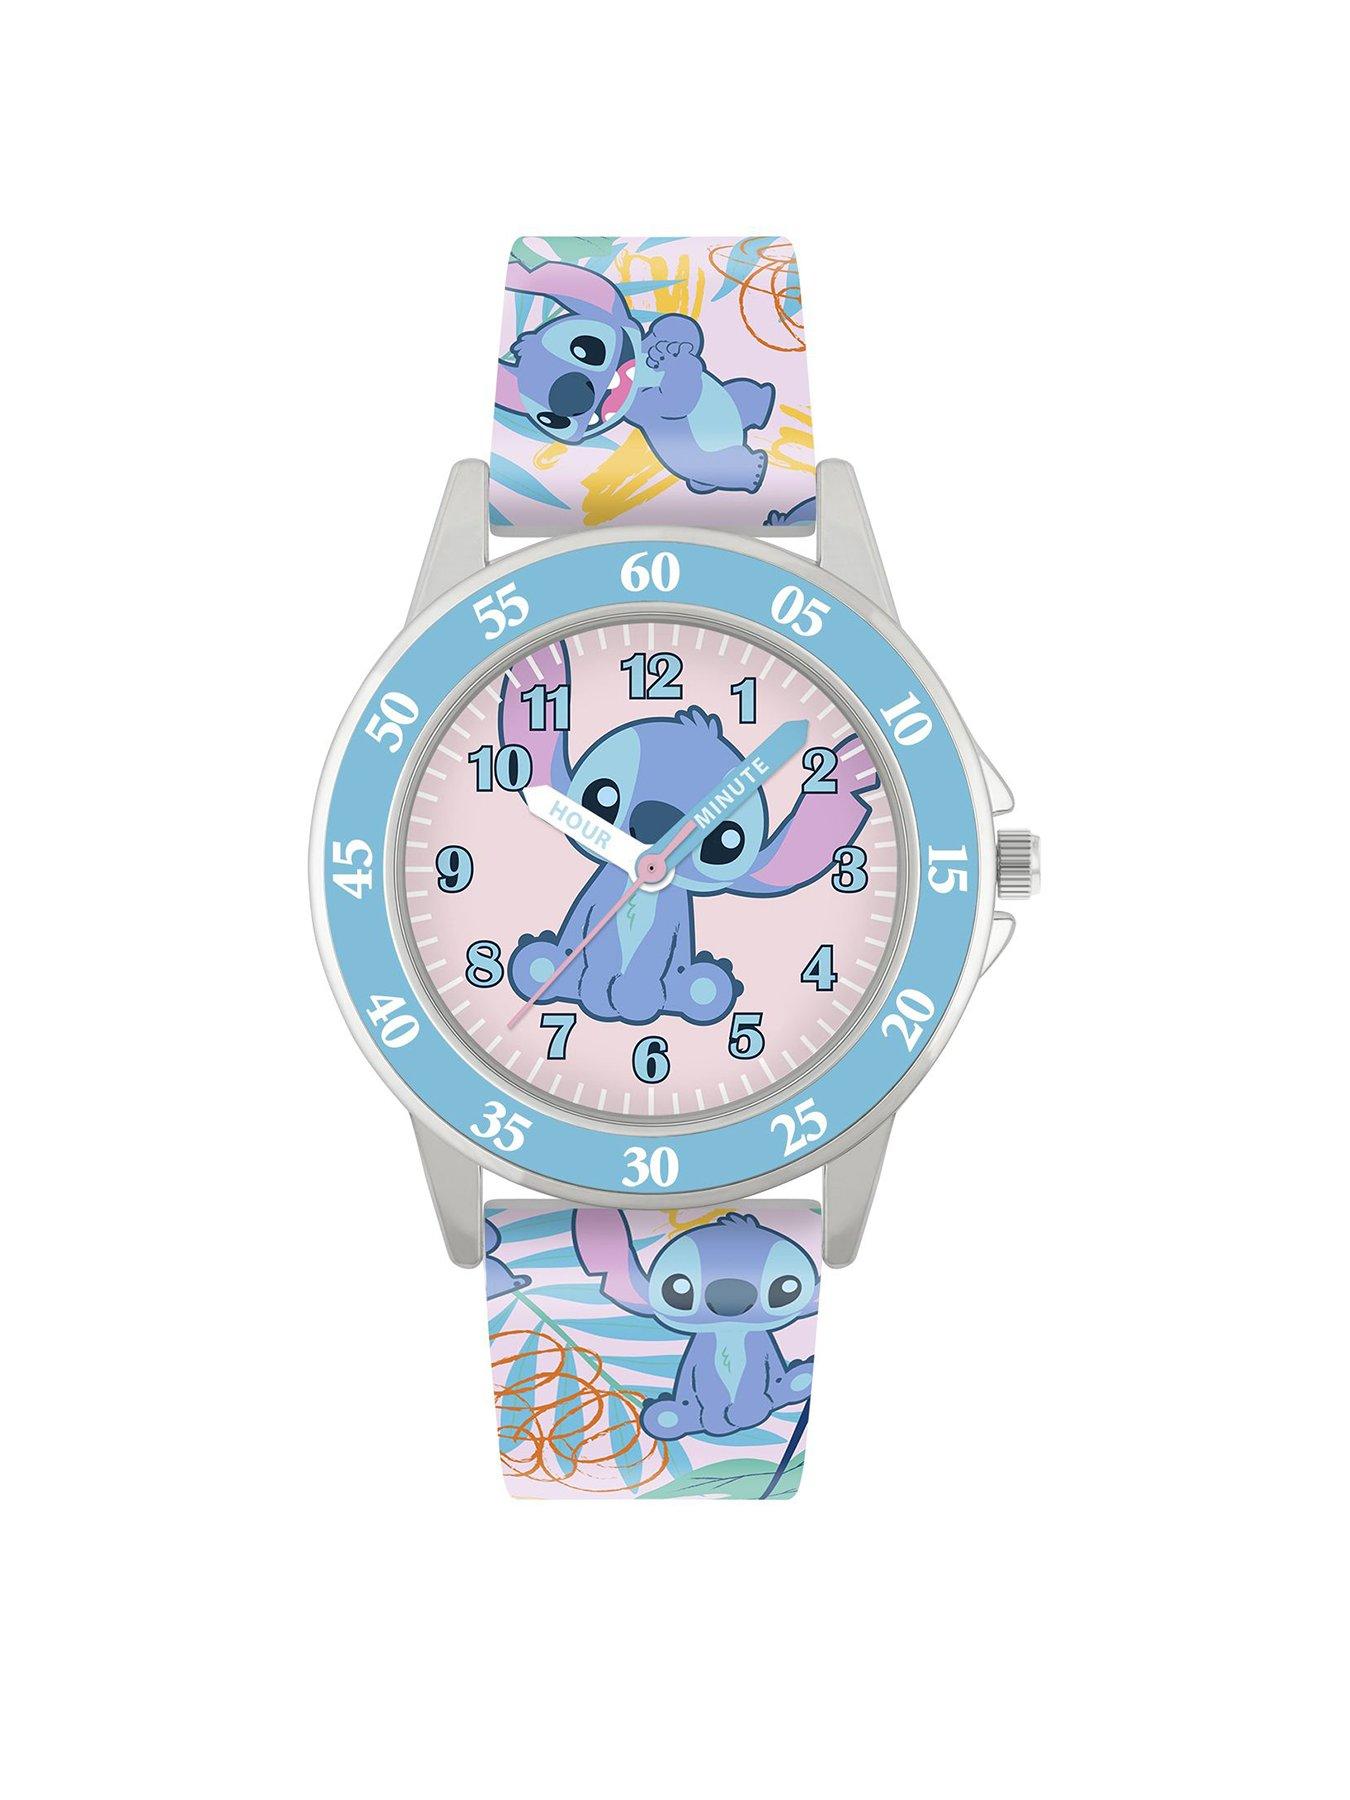 Lilo & Stitch Wrist Watch Kids Girls and Boys gift jewellery